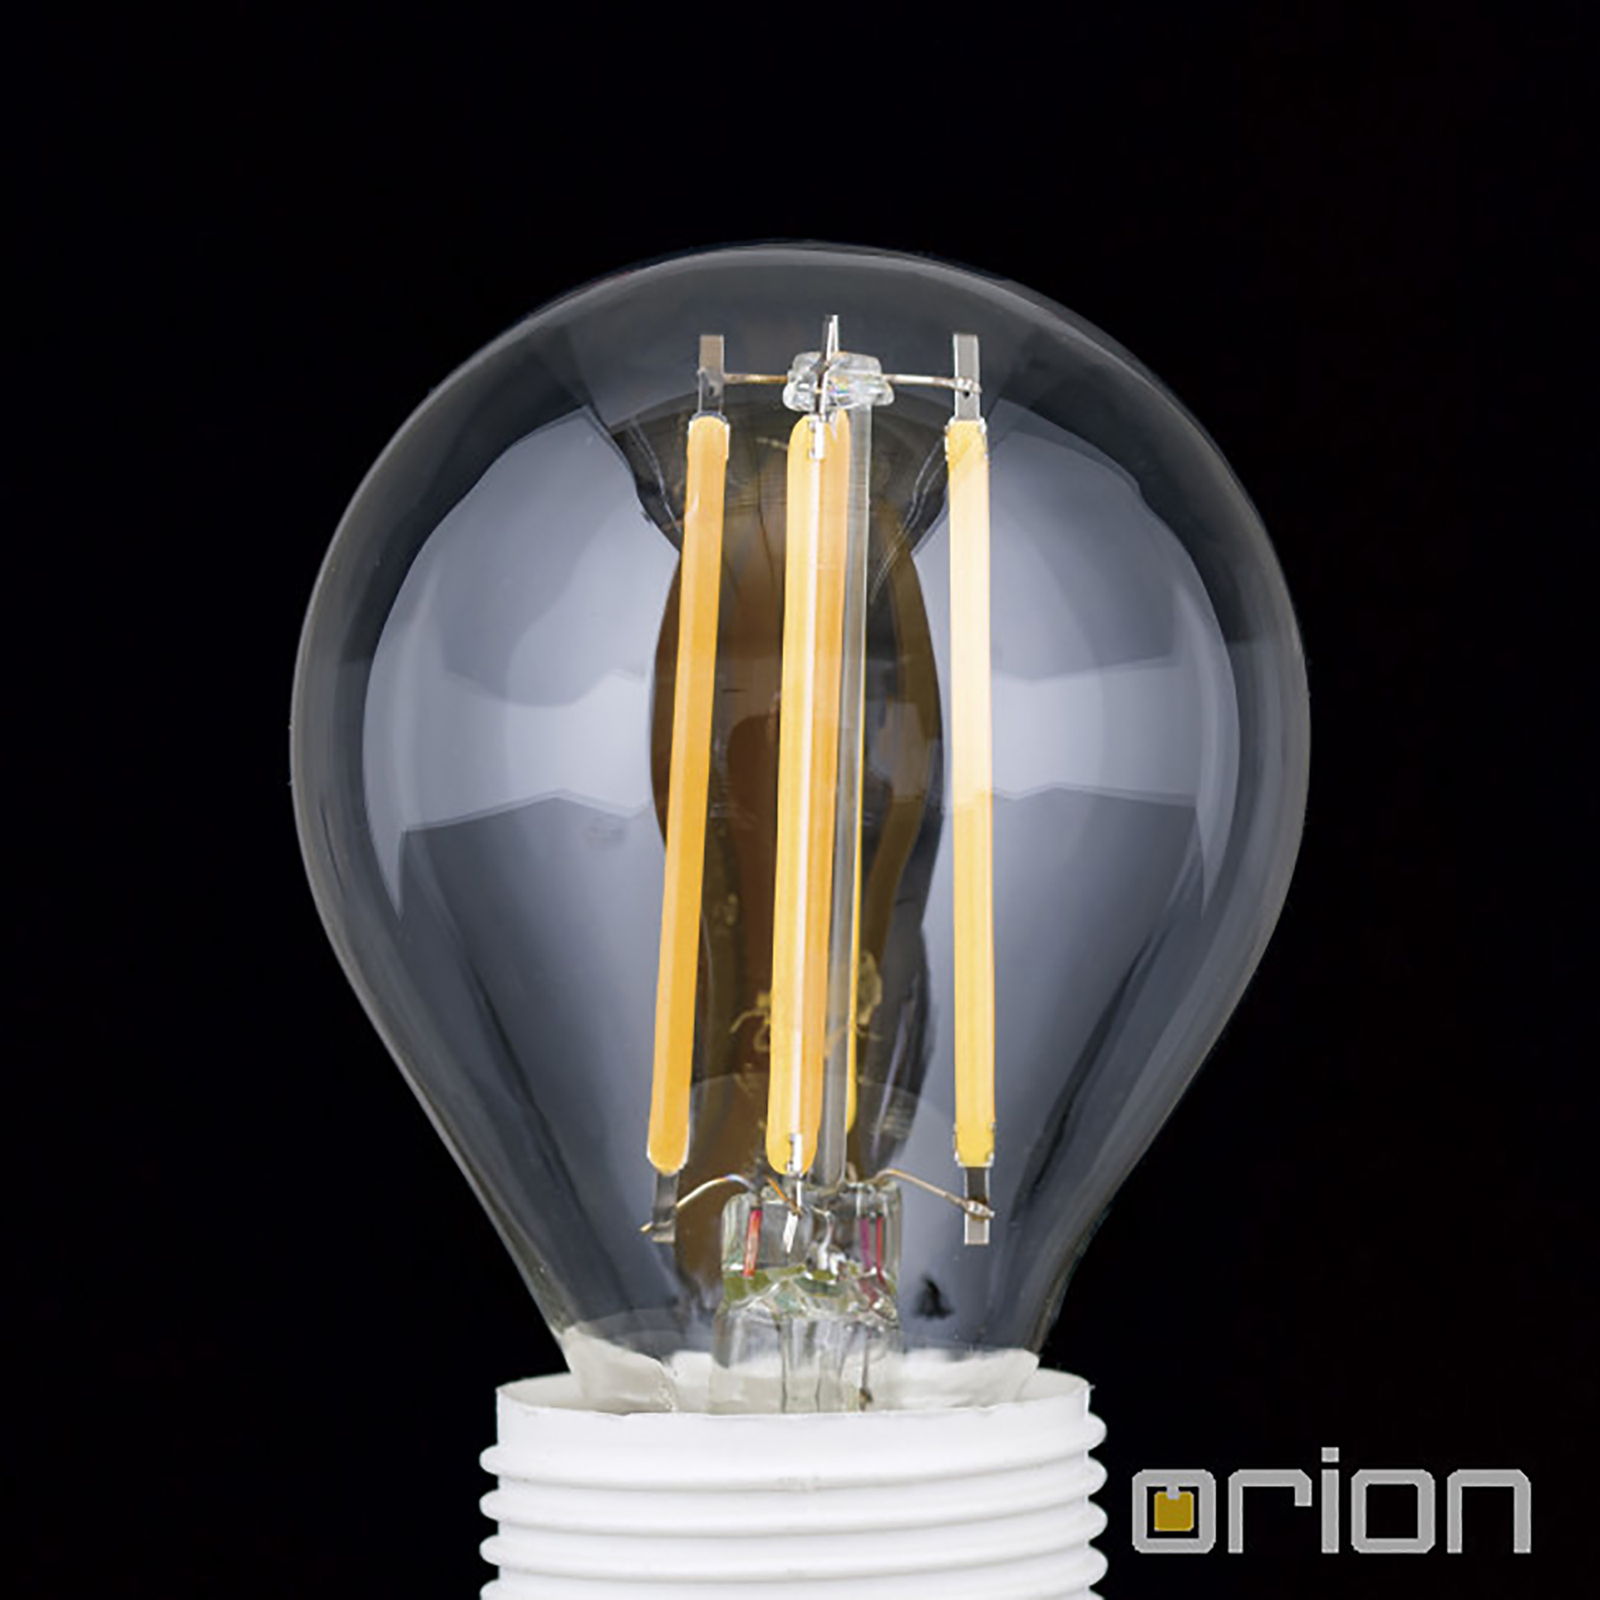 LED druppellamp E14 4,5W filament 827 dimbaar